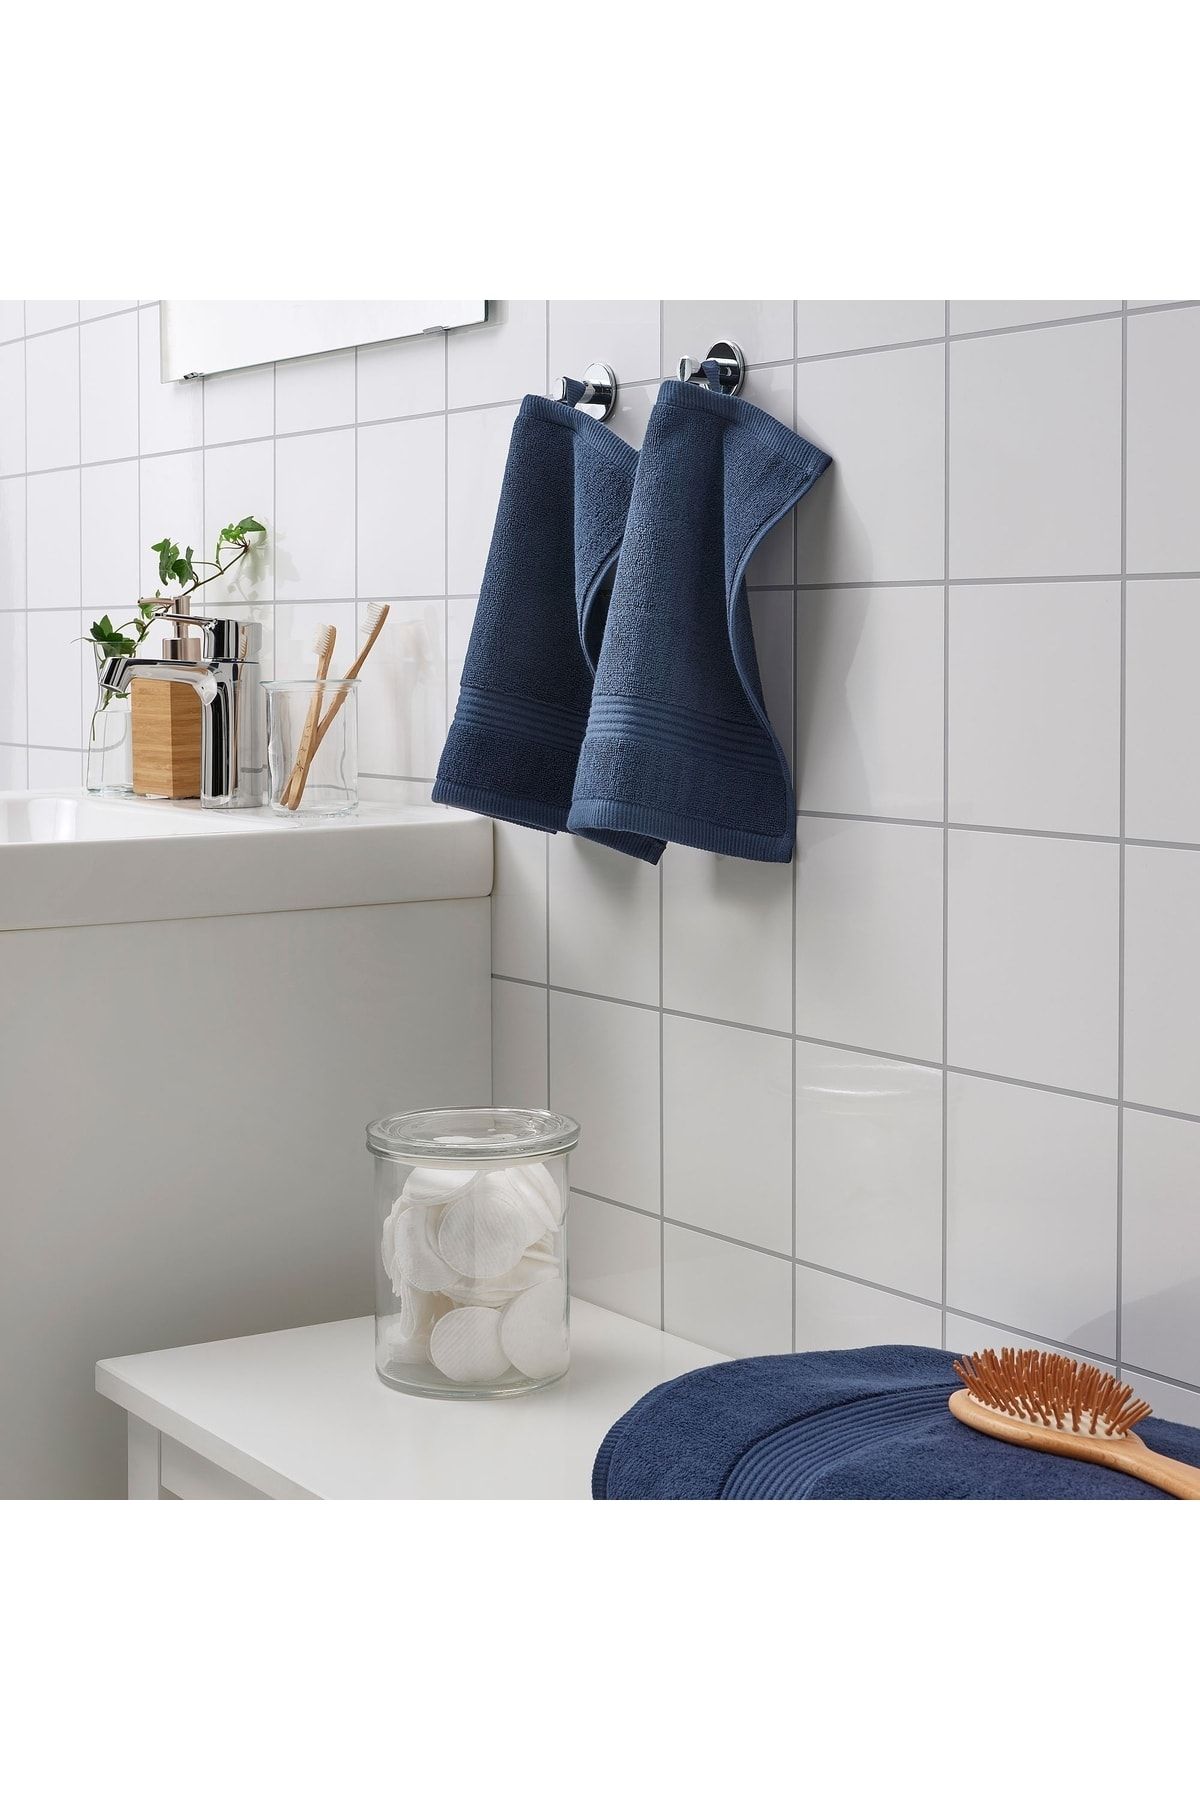 IKEA 3 Adet Küçük Banyo Havlusu 30x30 Cm El Yüz Havlusu Koyu Mavi Pamuk